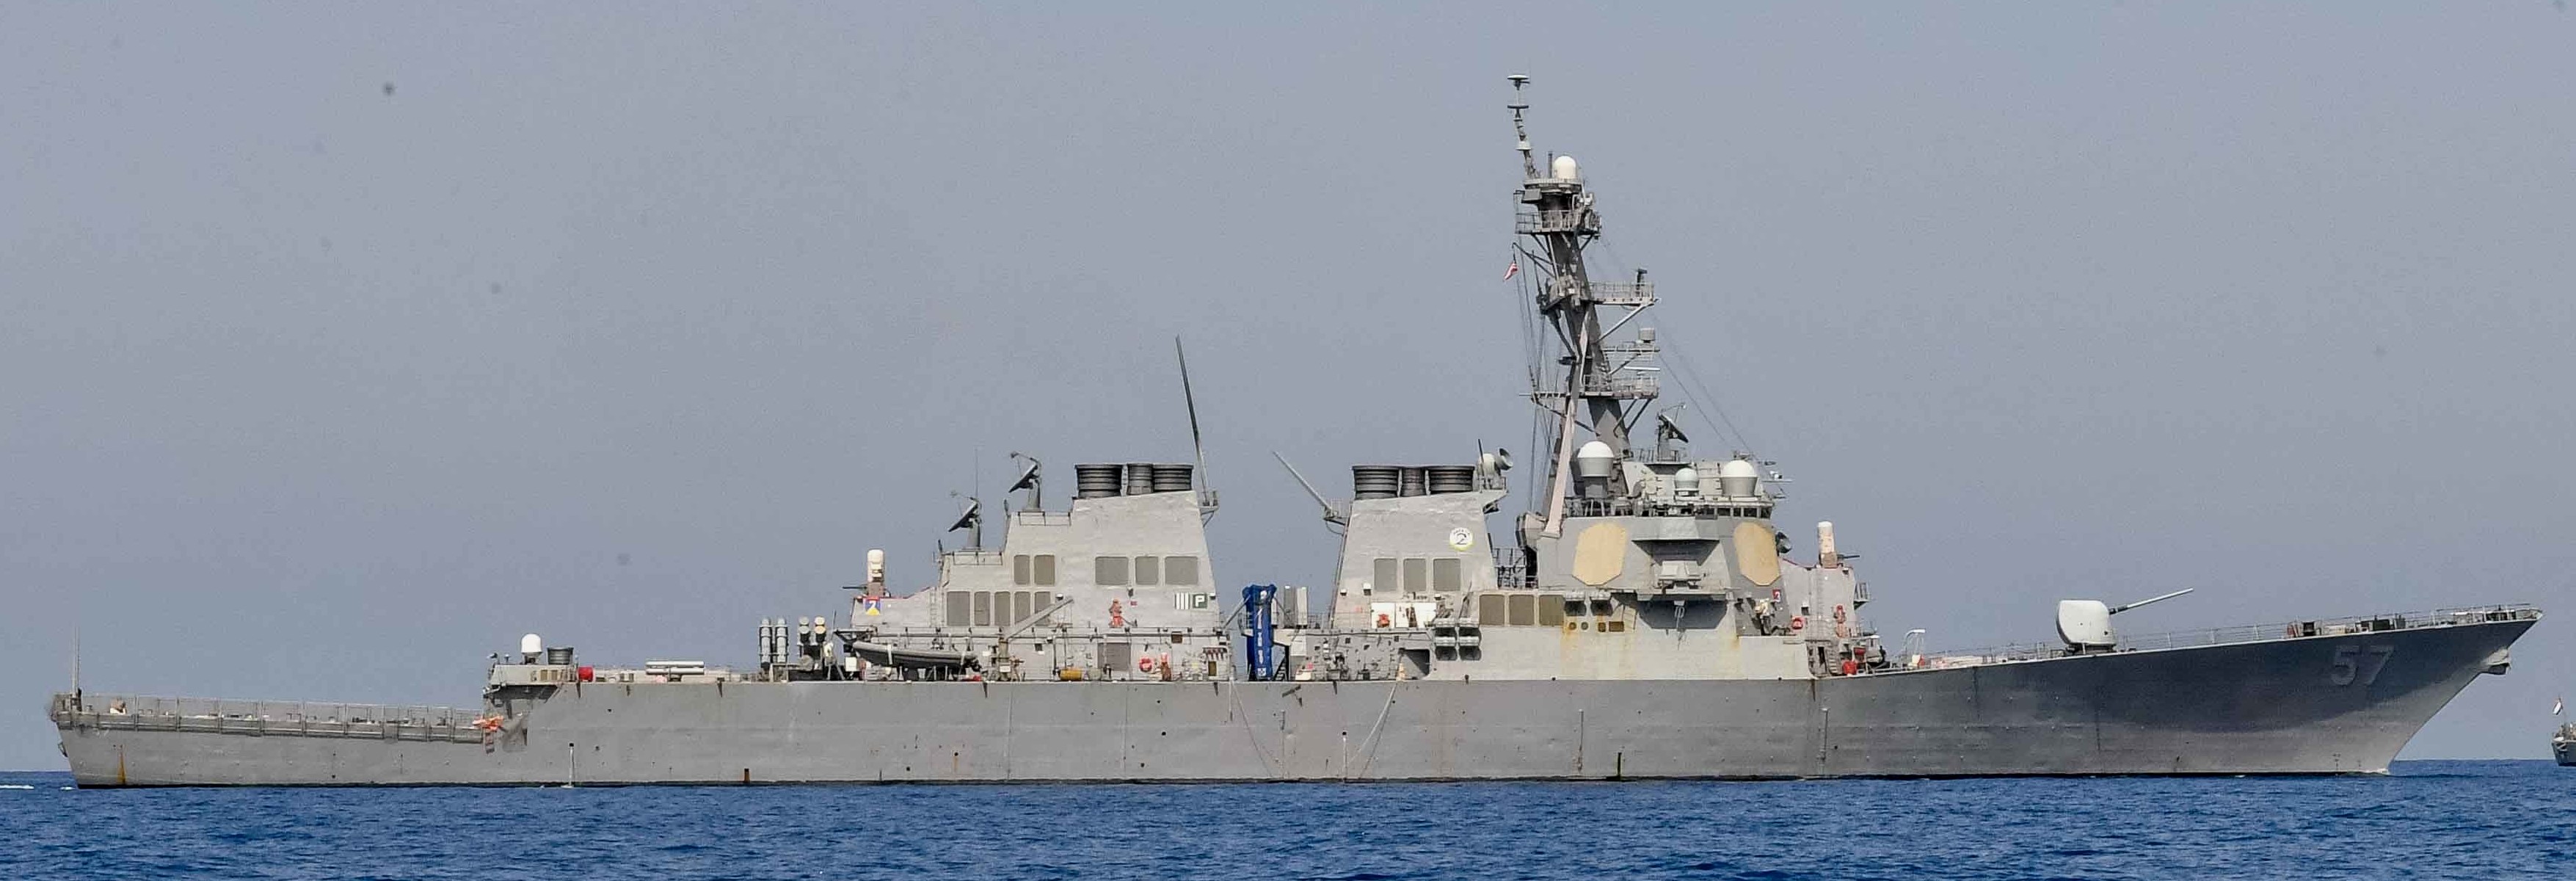 ddg-57 uss mitscher arleigh burke class guided missile destroyer us navy 97 safaga egypt